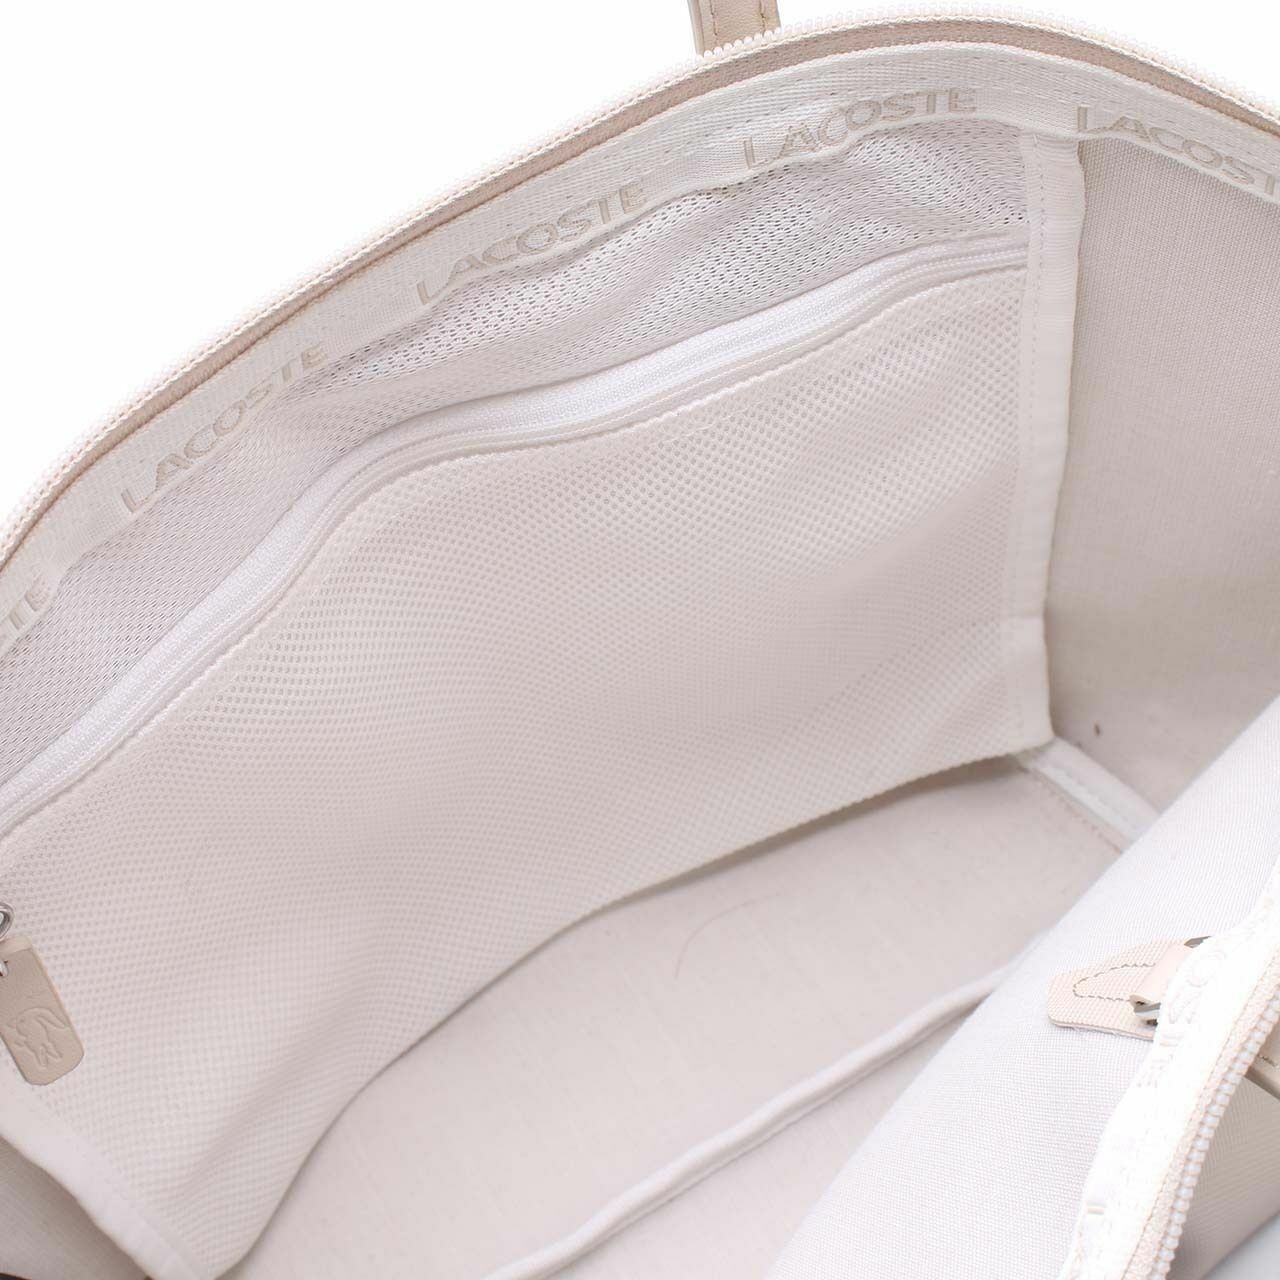 Lacoste Beige Women's L.12.12 Concept Small Zip Tote Bag